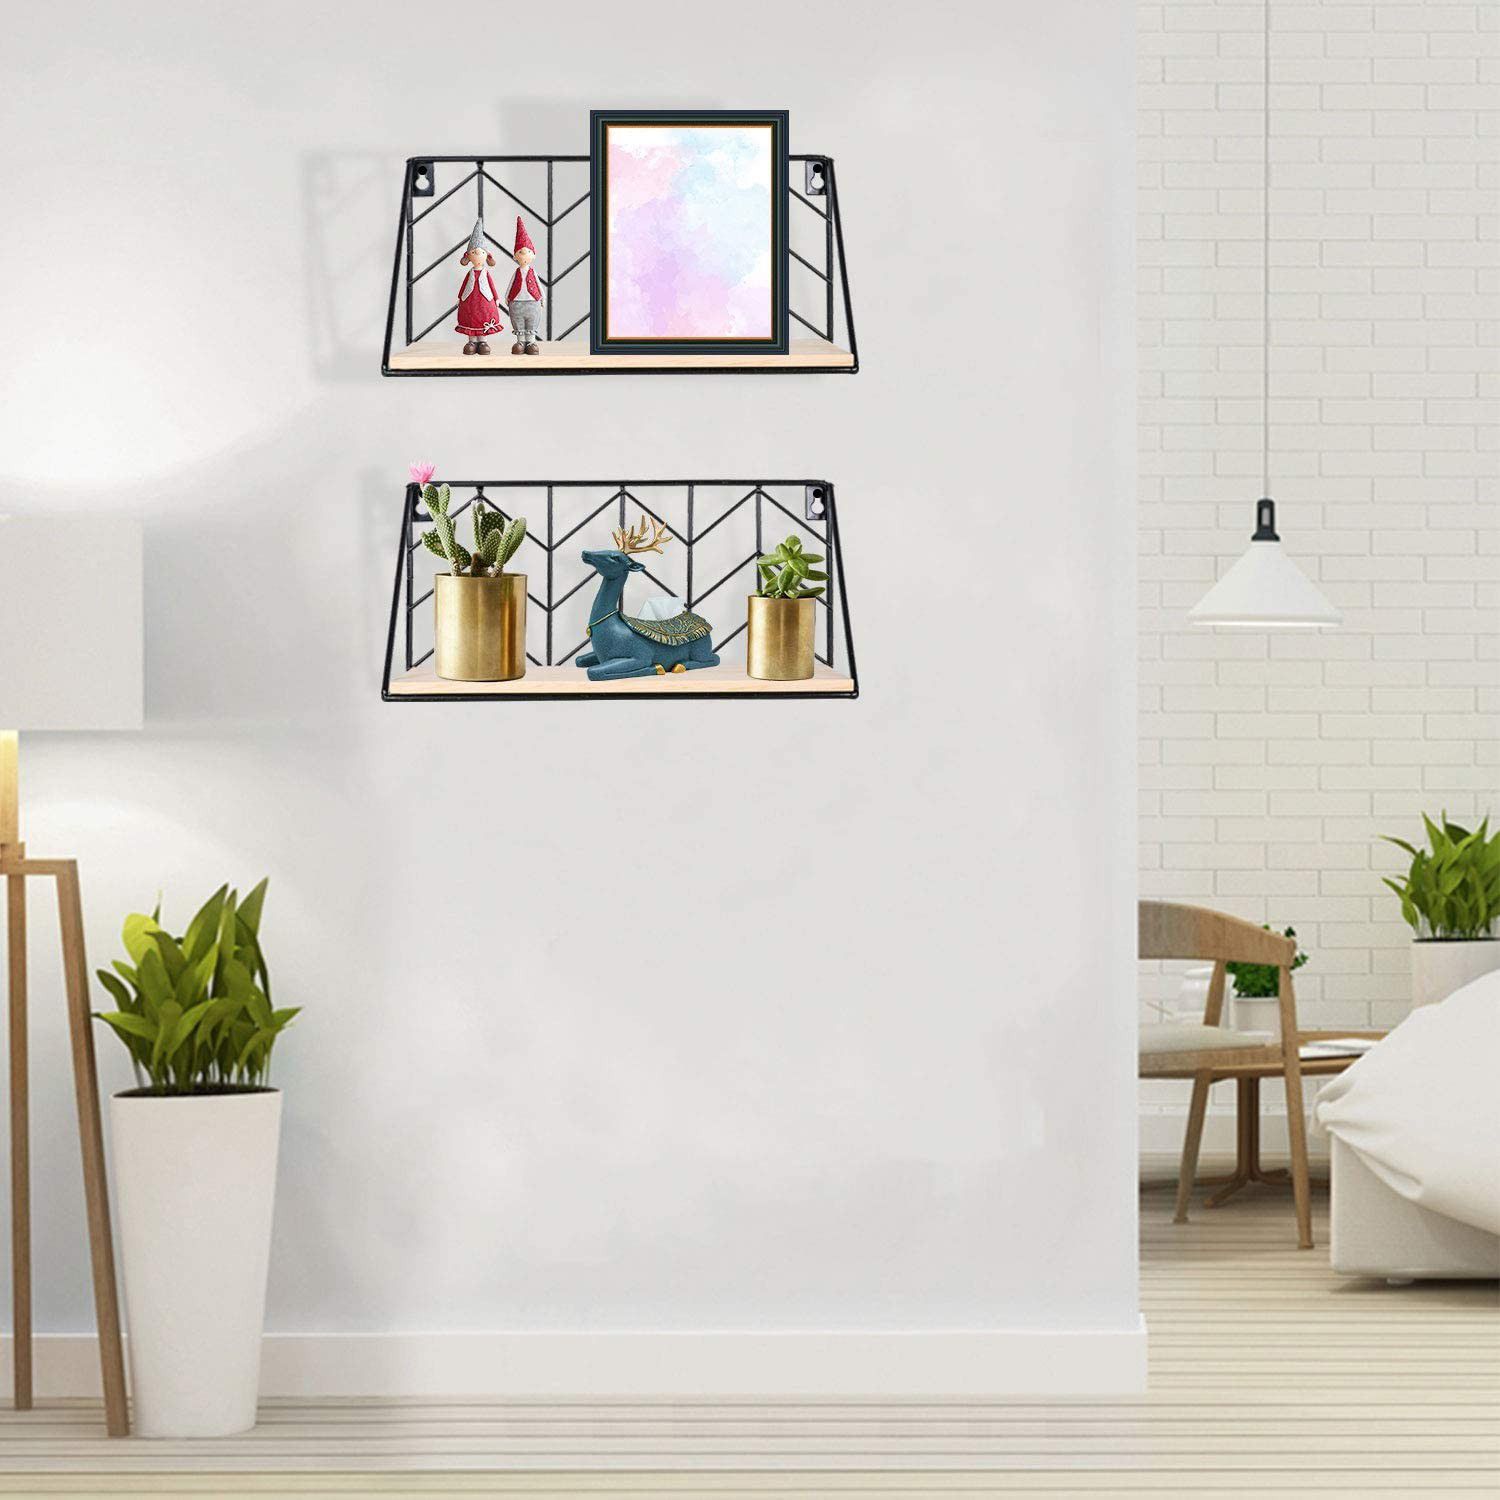 Floating Shelves Wall Mounted Set of 2 Rustic Arrow Design Wood Storage for Bedroom, Living Room, Bathroom, Kitchen